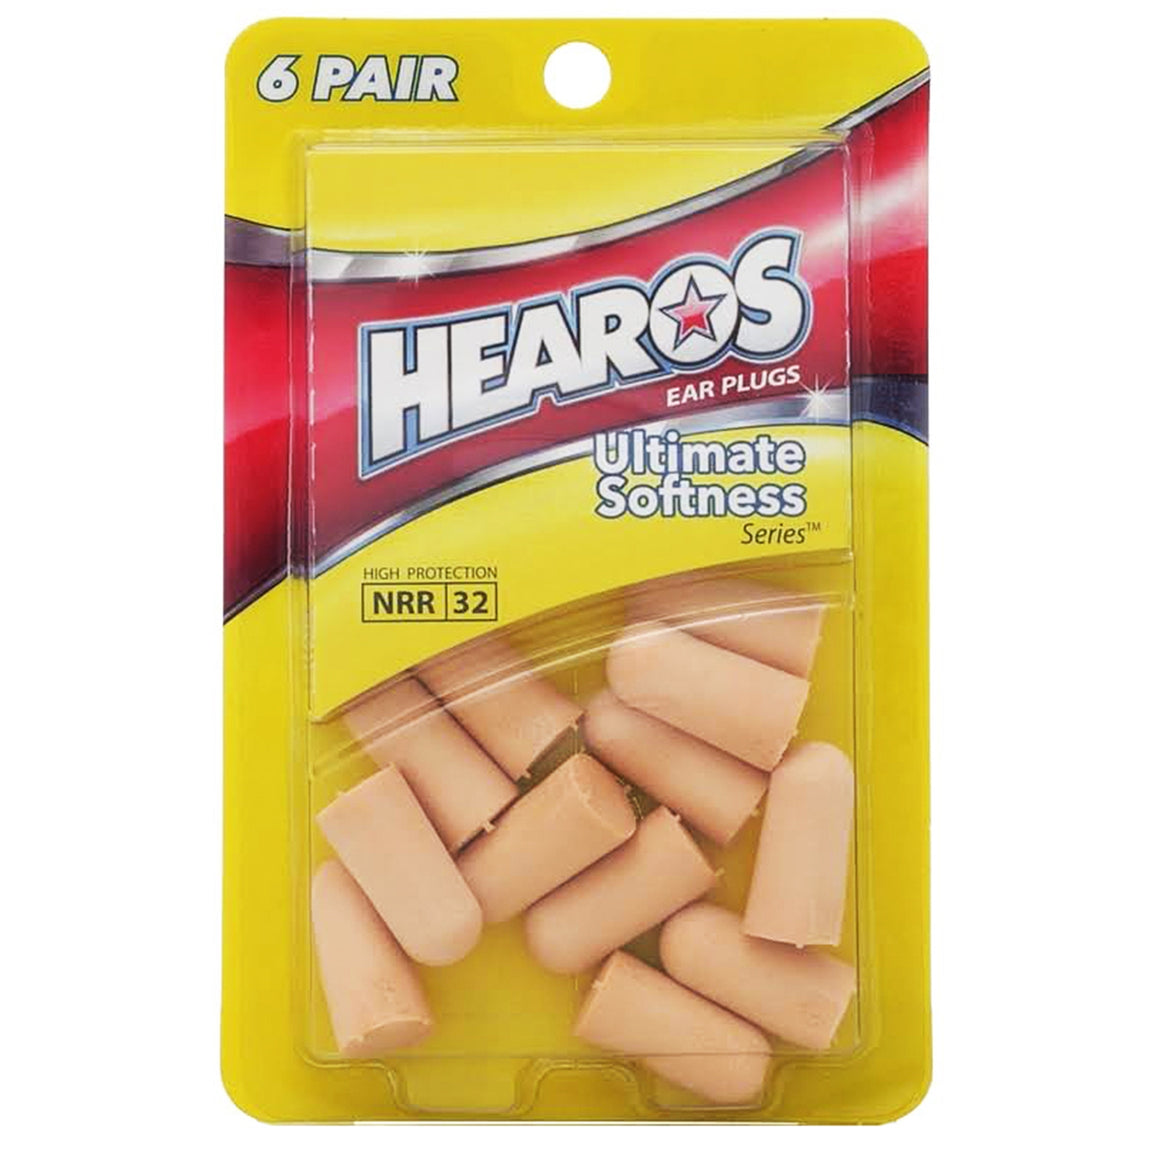 Hearos 5414 Ultimate Softness Series Ear Plugs 6 Pair